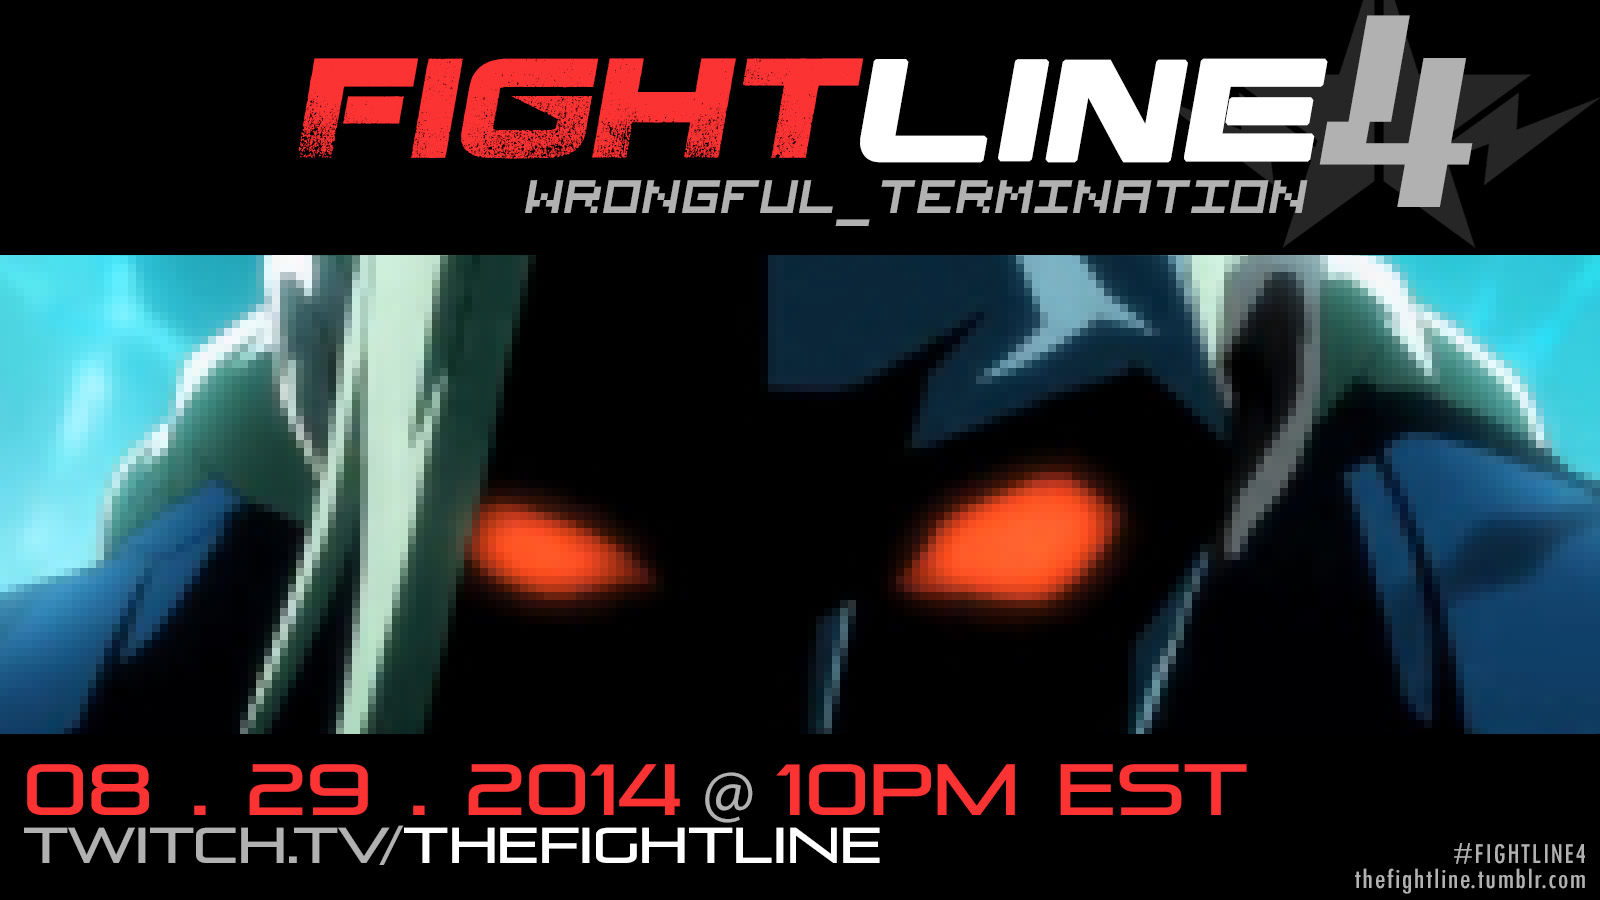 [IMAGE] Fightline 4 Promo